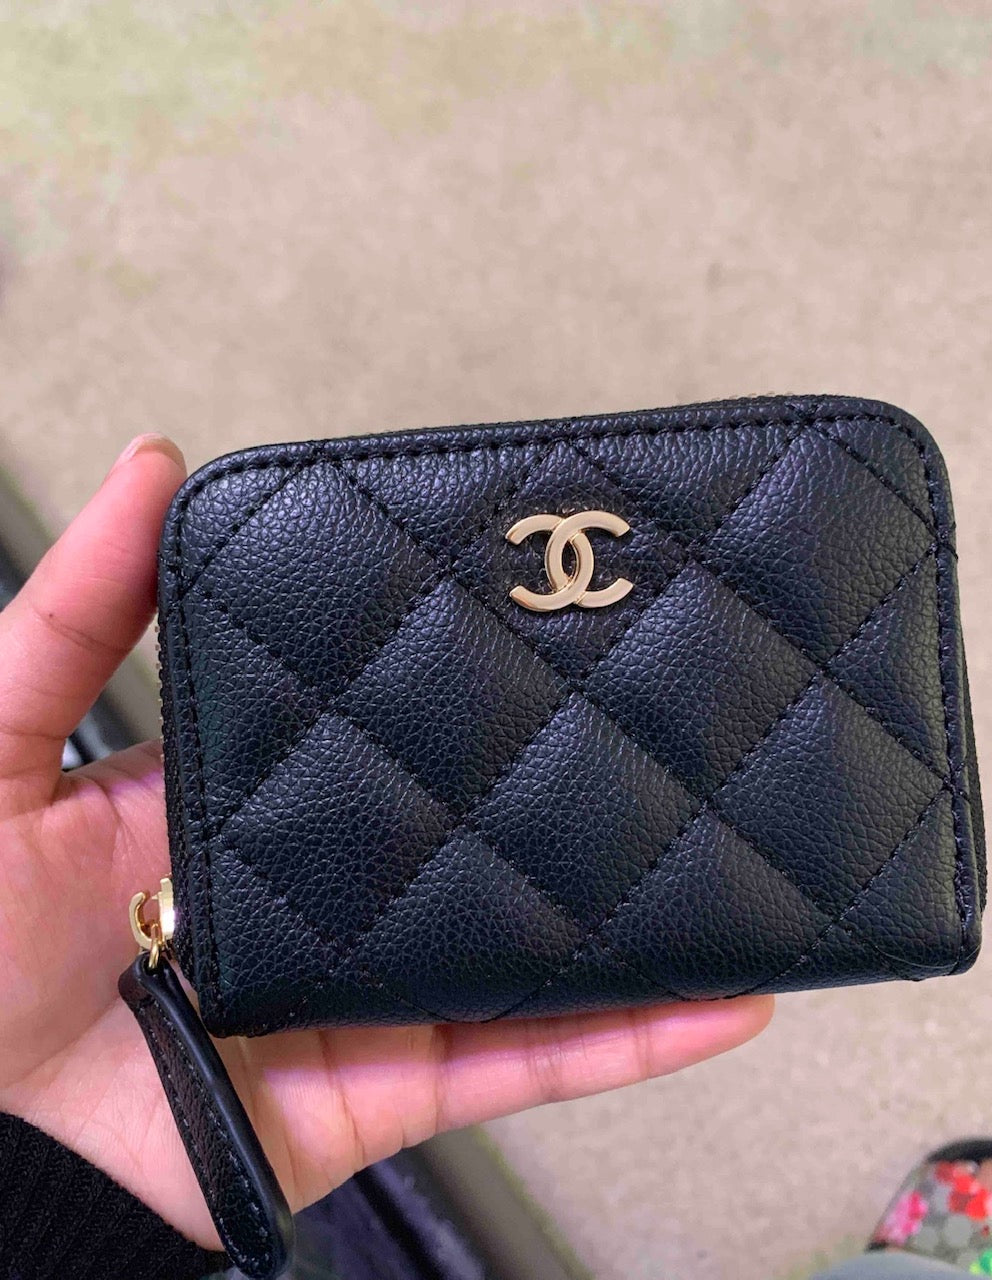 Authentic Chanel short wallet